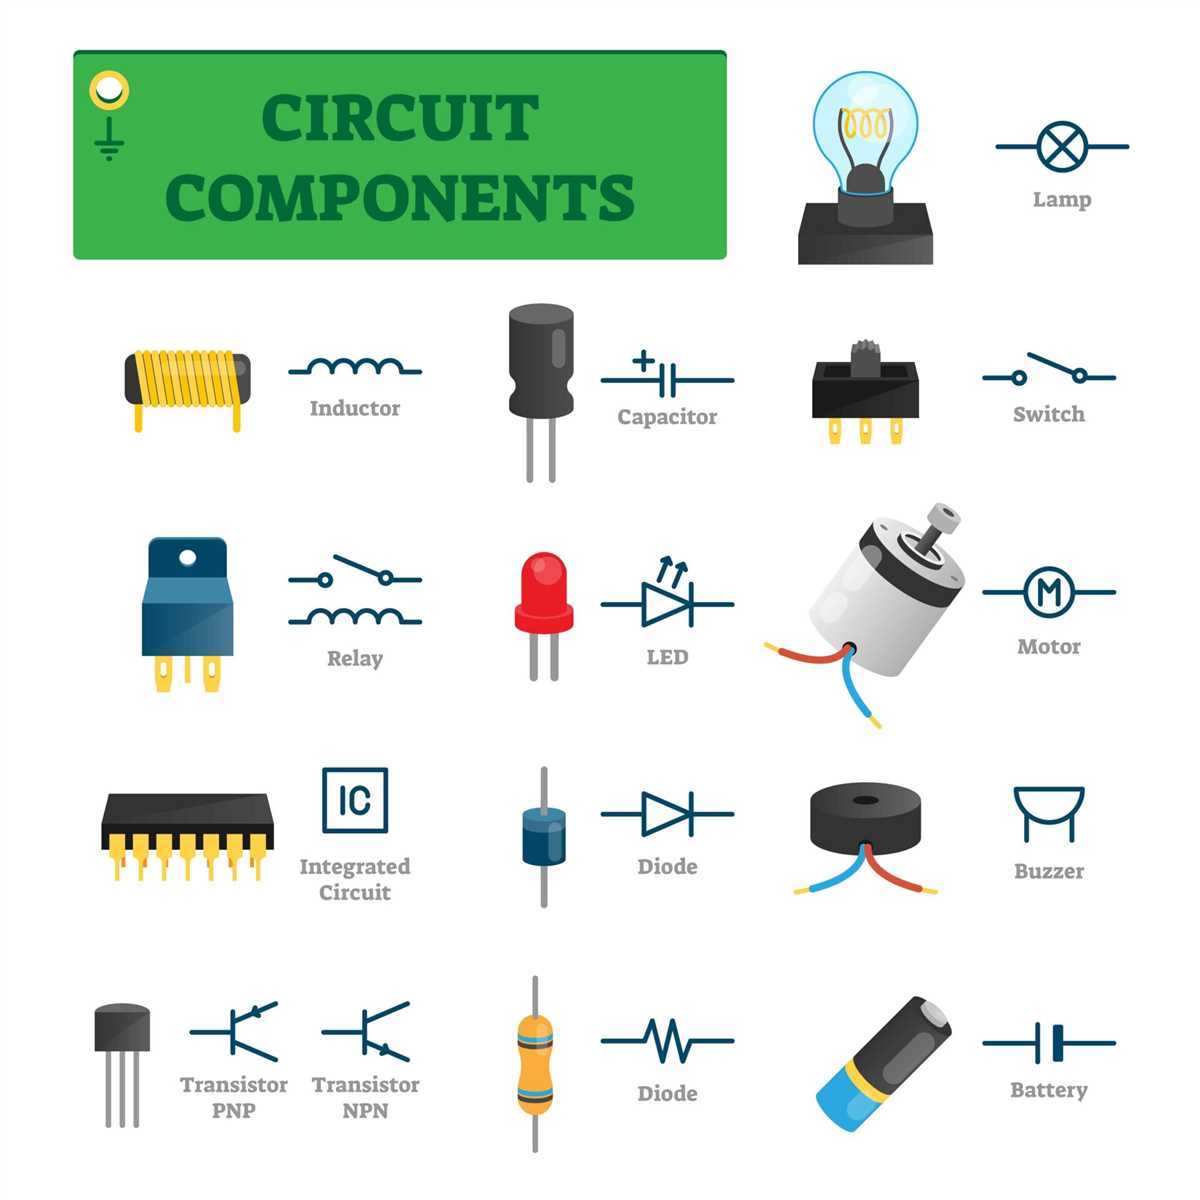 Circuit board components diagram